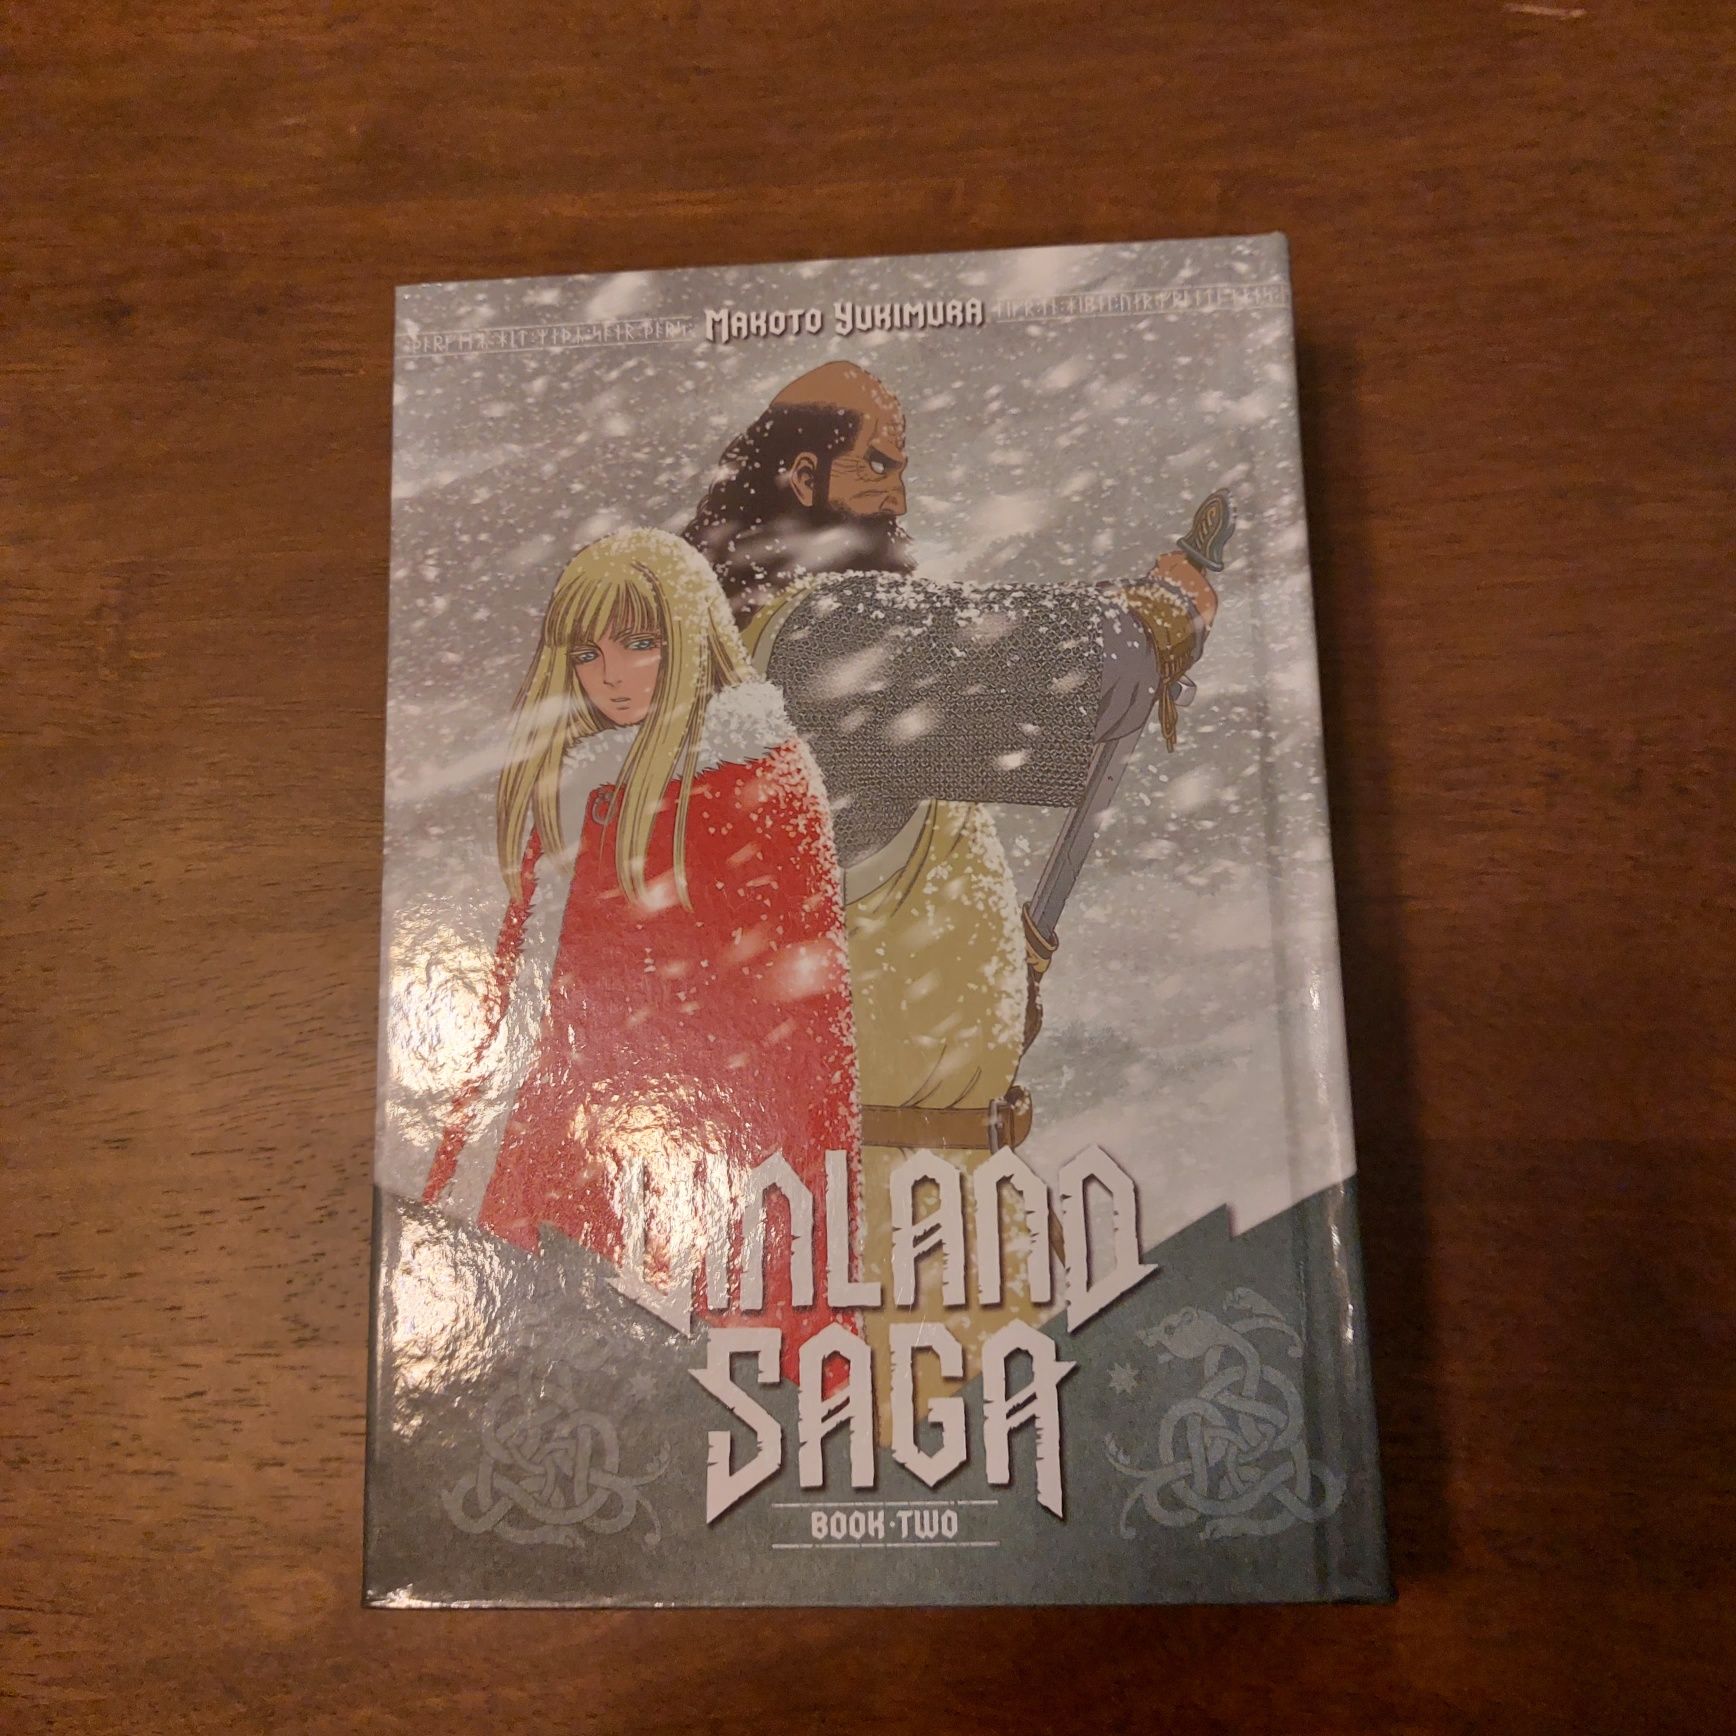 Vinland Saga manga